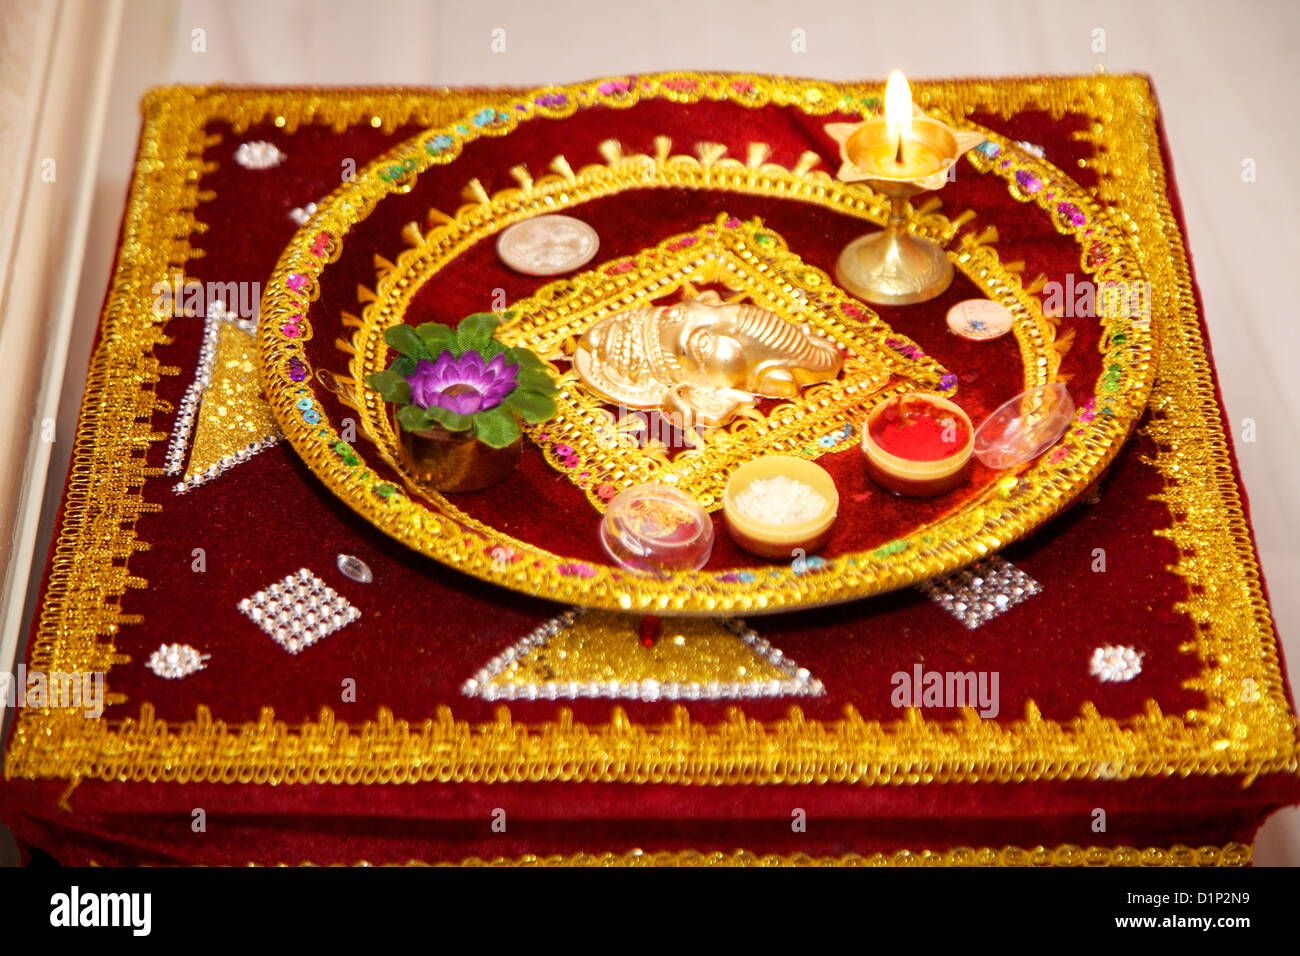 Hindu wedding service paraphenalia Stock Photo